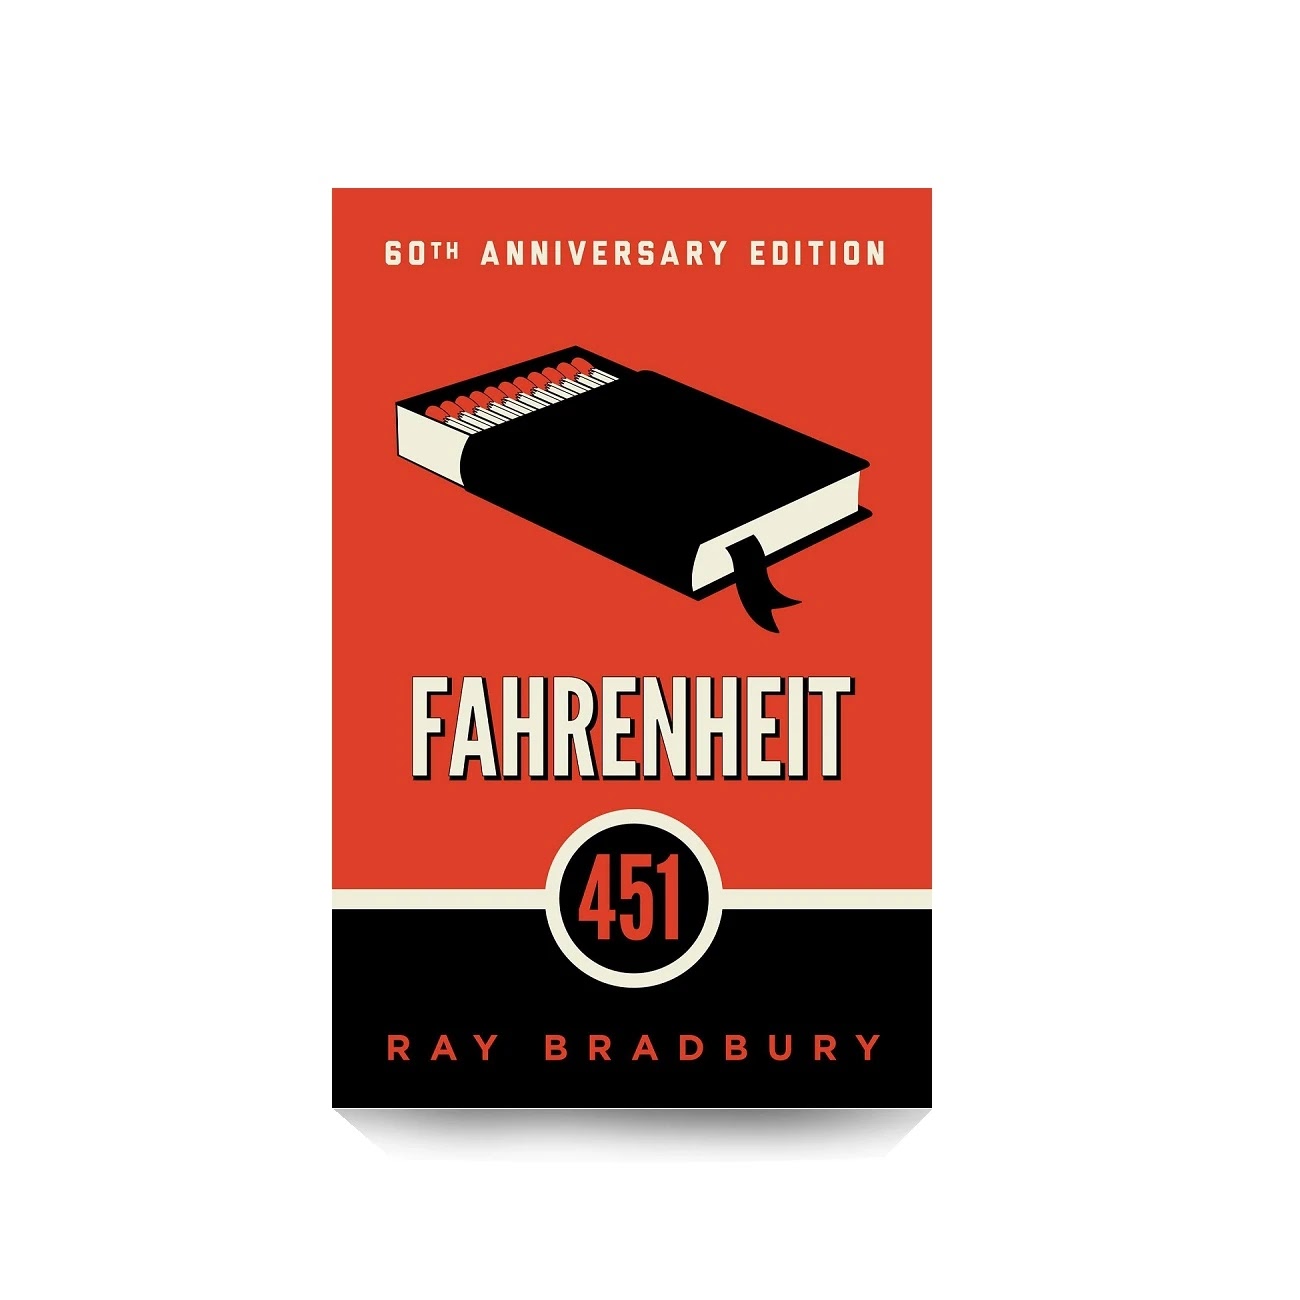 Брэдбери 451 по фаренгейту аудиокнига. Fahrenheit 451 by ray Bradbury. 451 Градус по Фаренгейту книга.